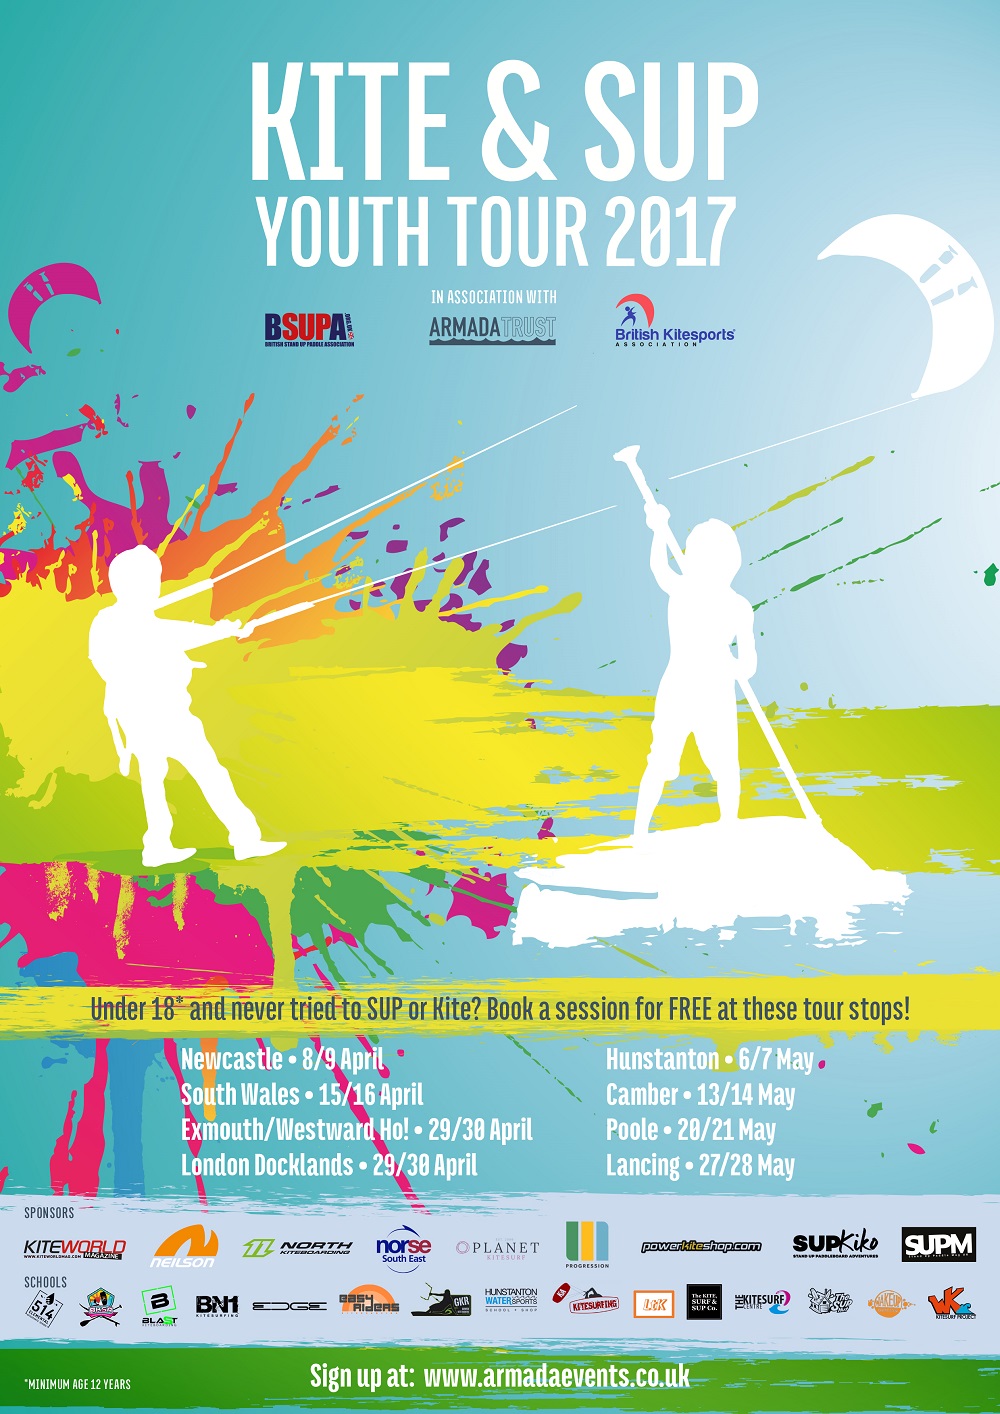 Kite & SUP Youth Tour#3